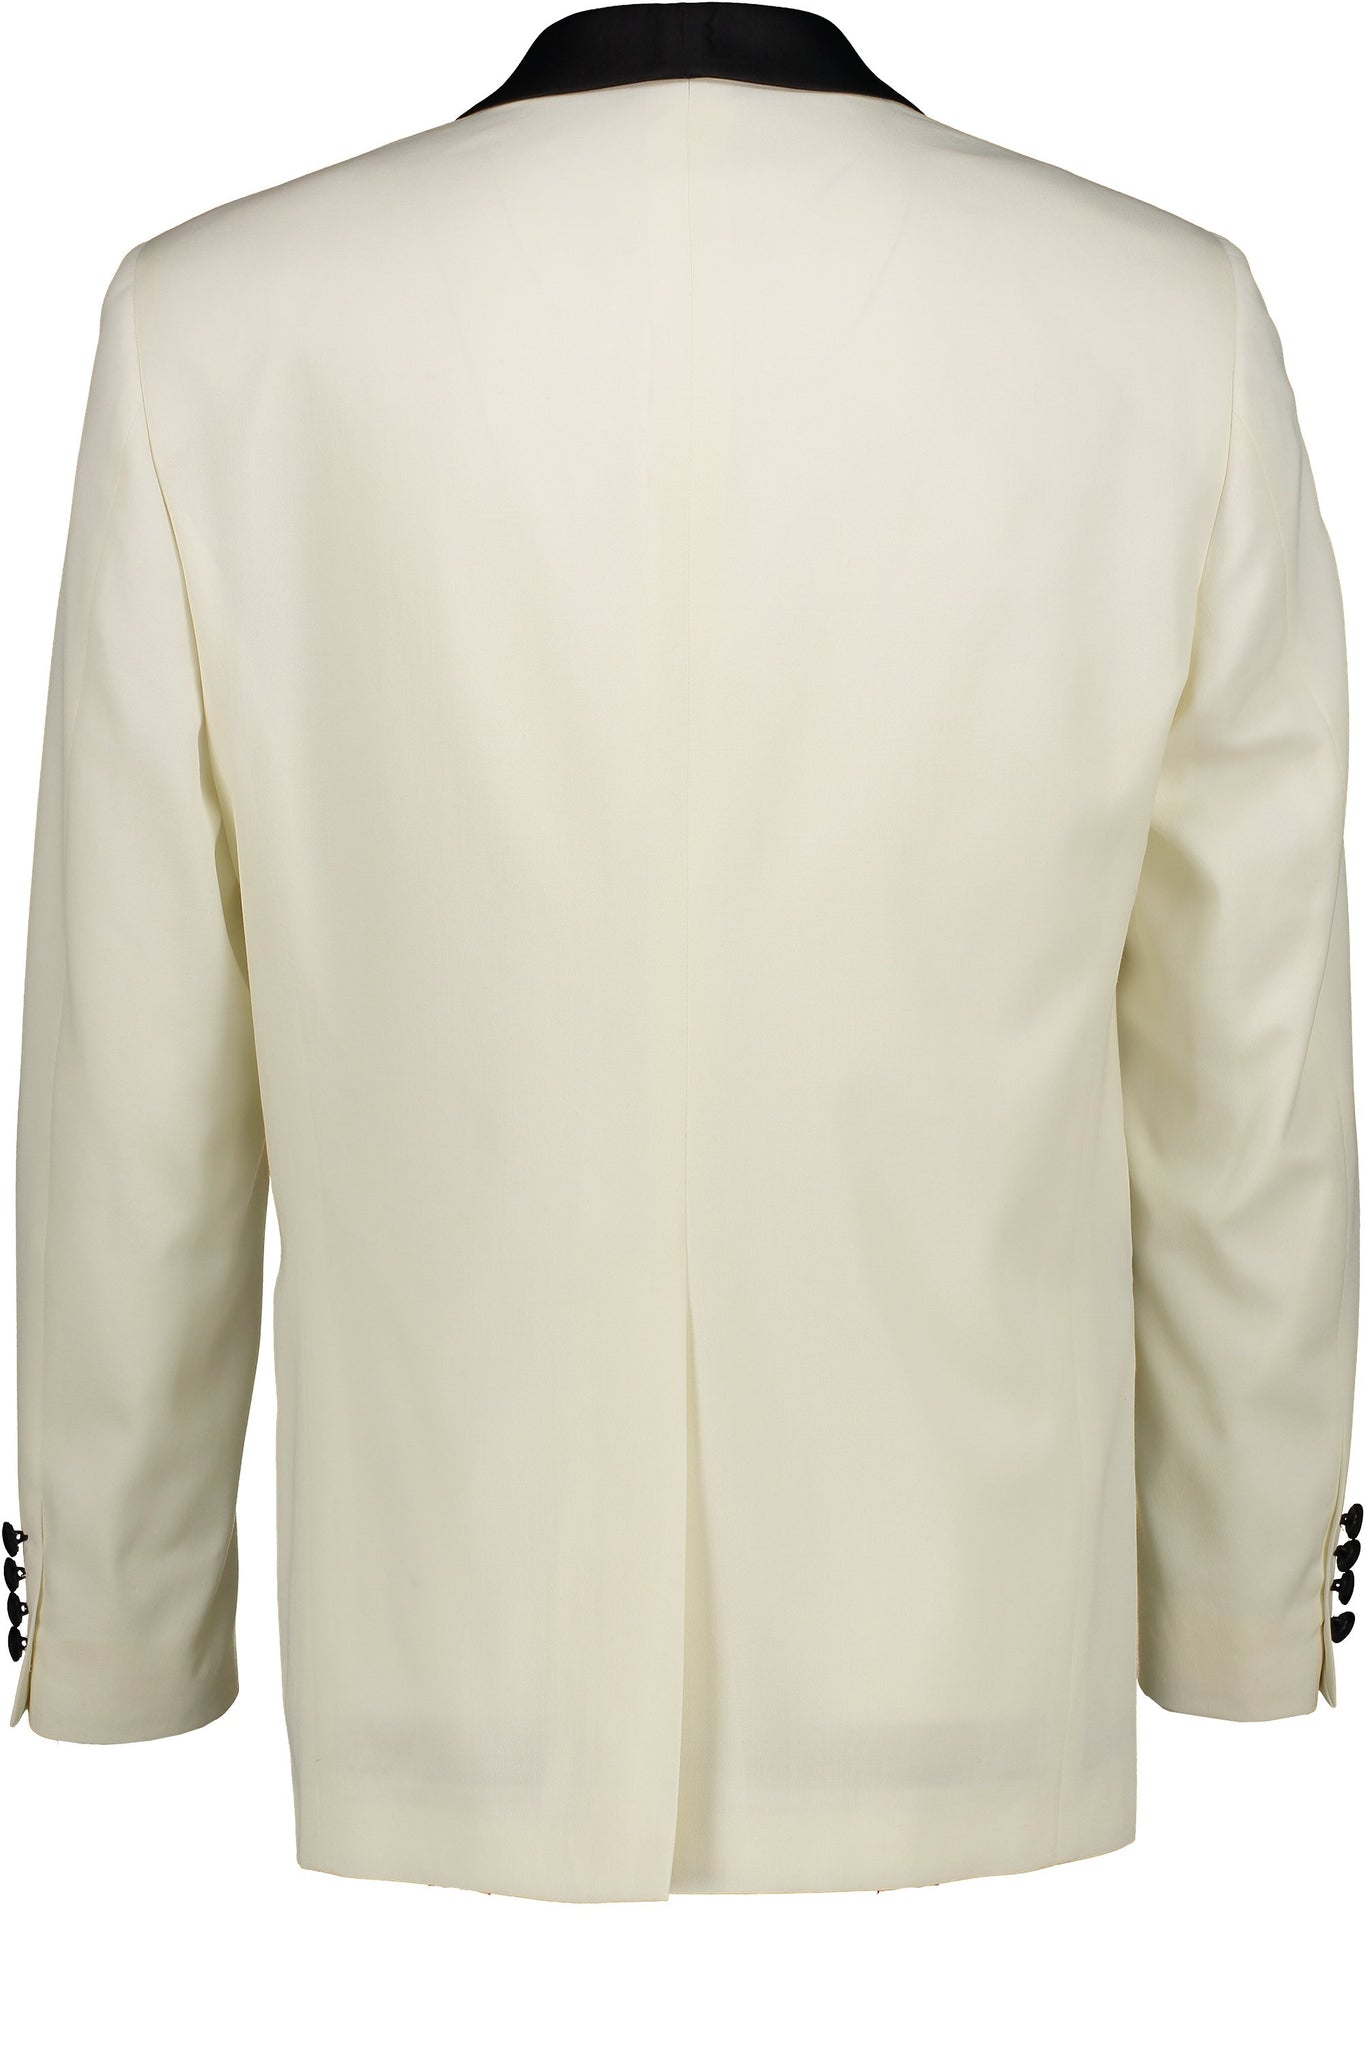 Classic Fit Ivory Wool Dinner Jacket with Black Satin Shawl Collar -  Hardwick.com